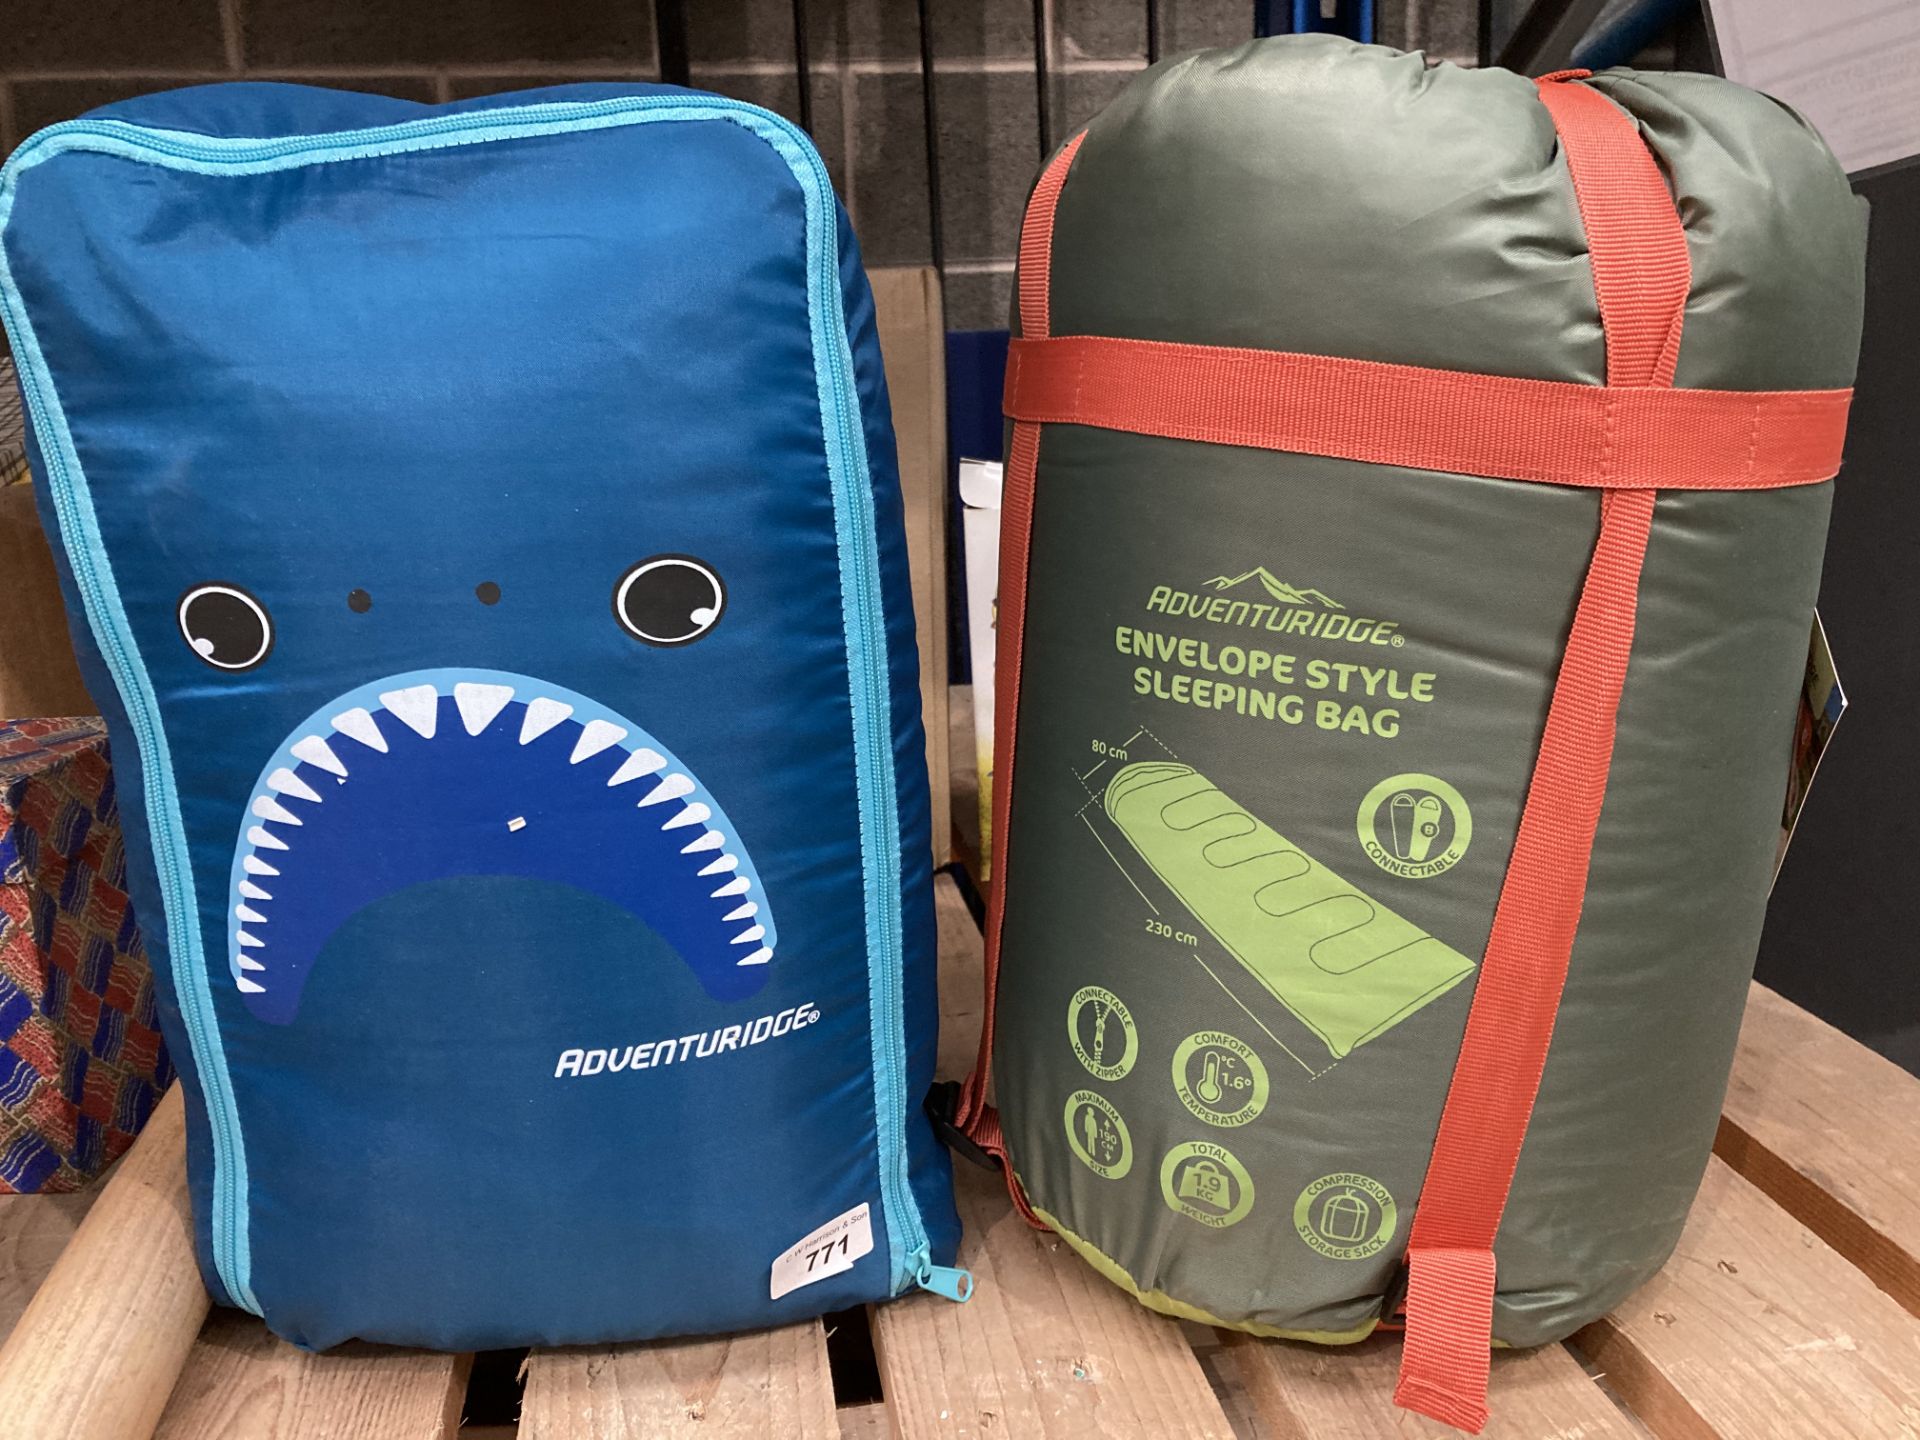 Adventuridge envelope style sleeping bag 80cm x 230cm and a Adventuridge Shark sleeping bag 170cm x